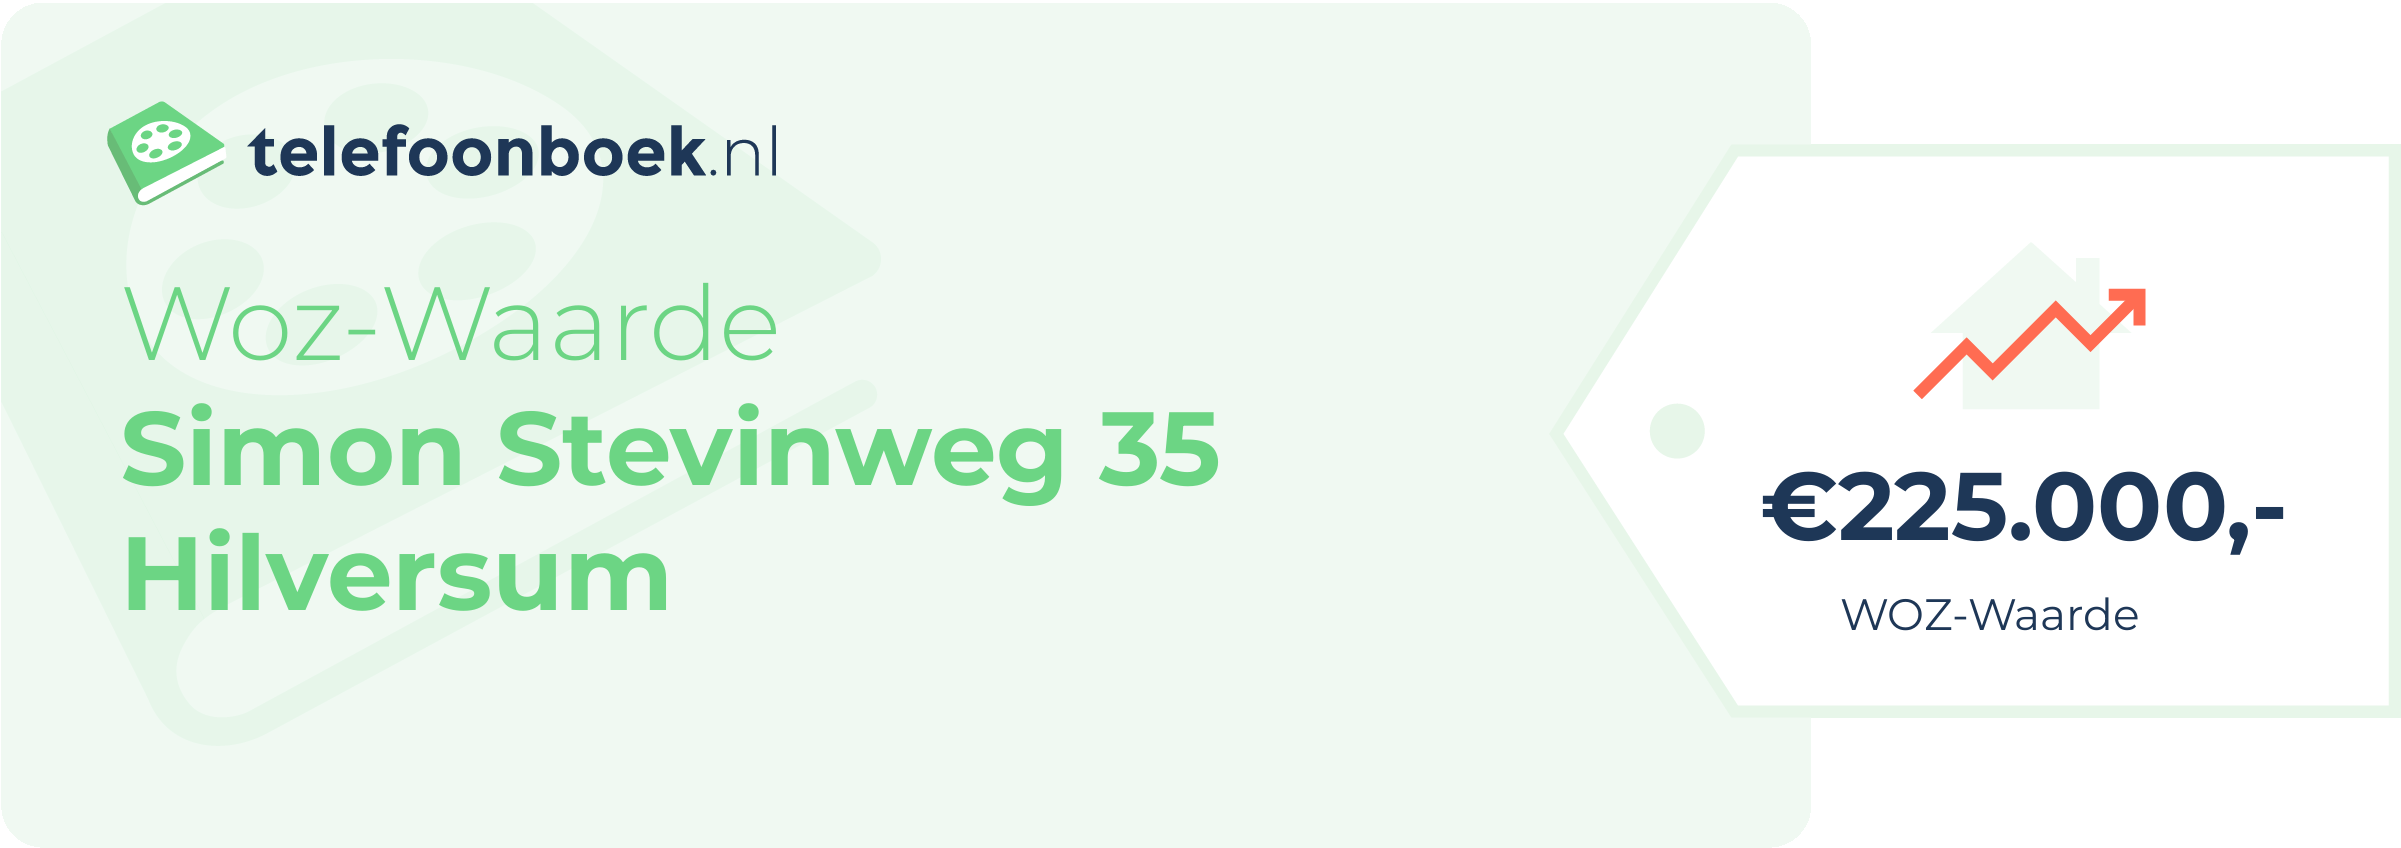 WOZ-waarde Simon Stevinweg 35 Hilversum